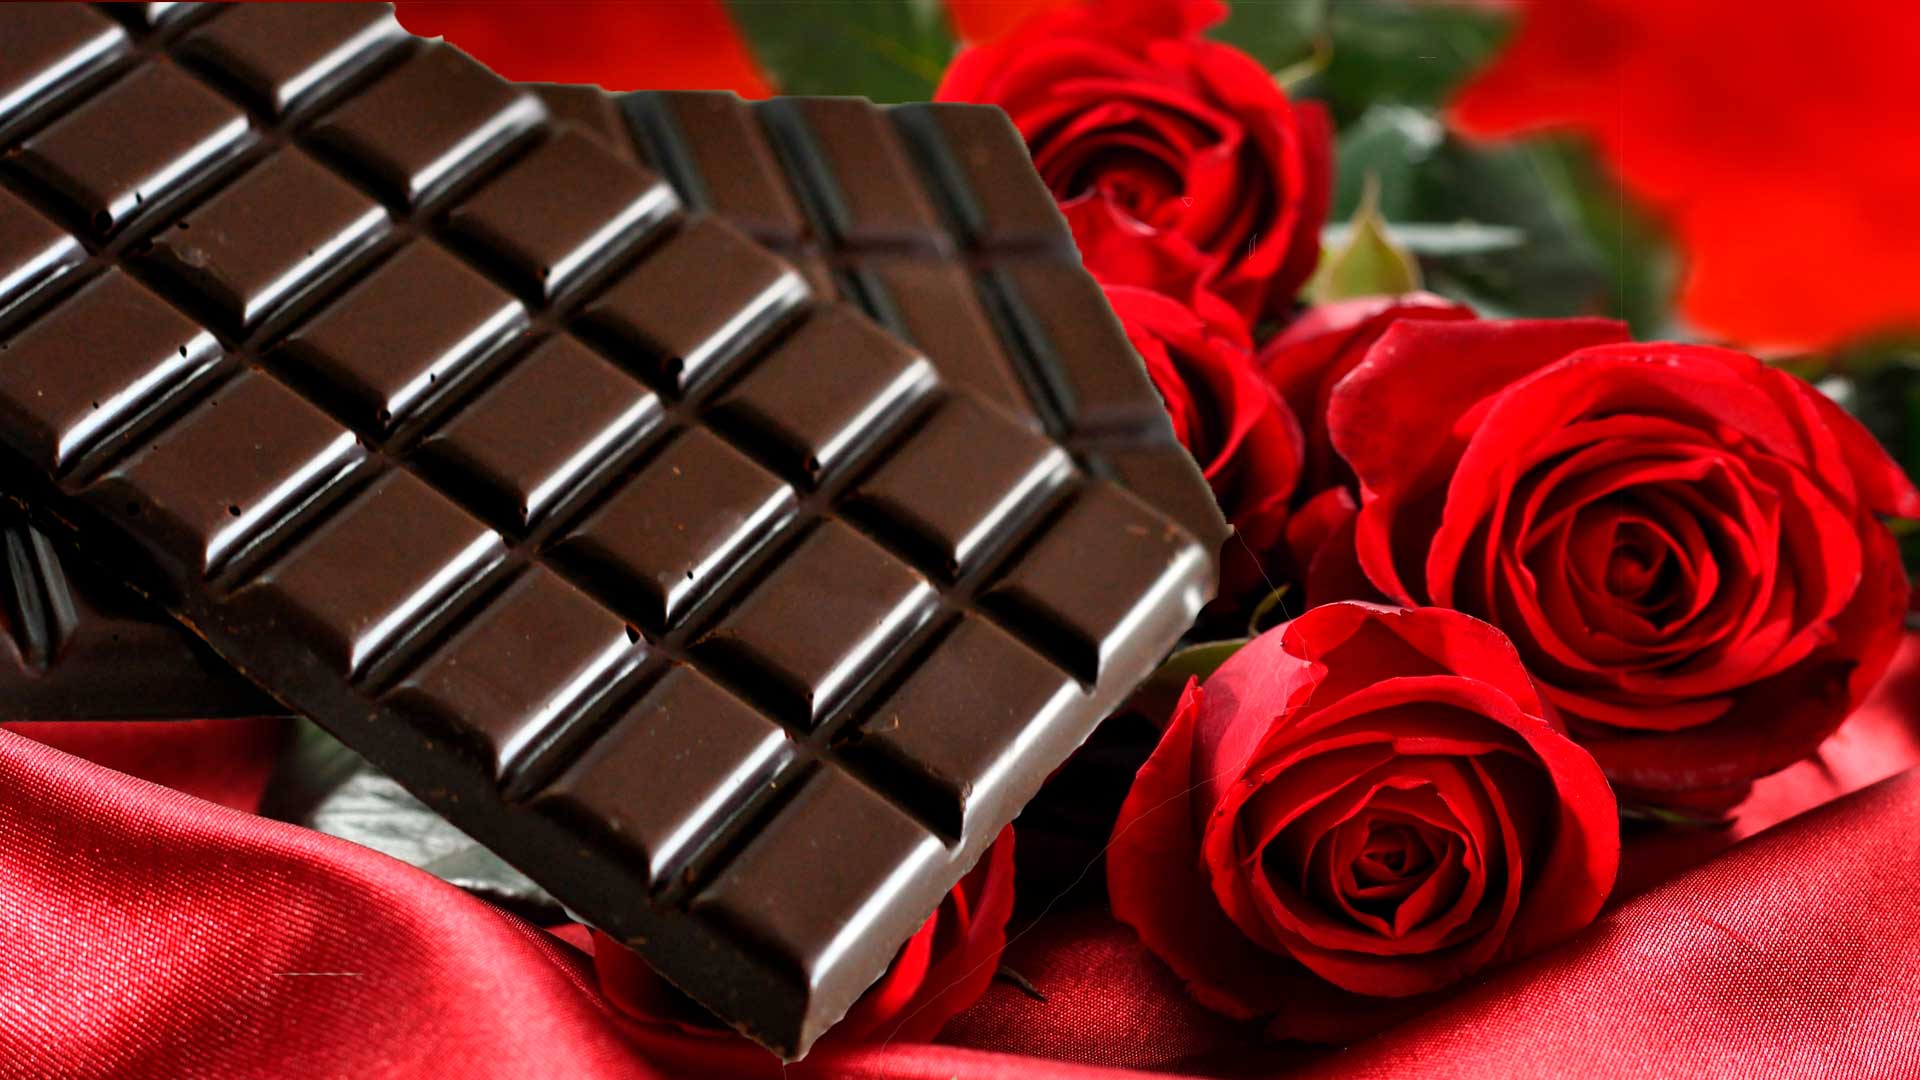 Chocolate beauty